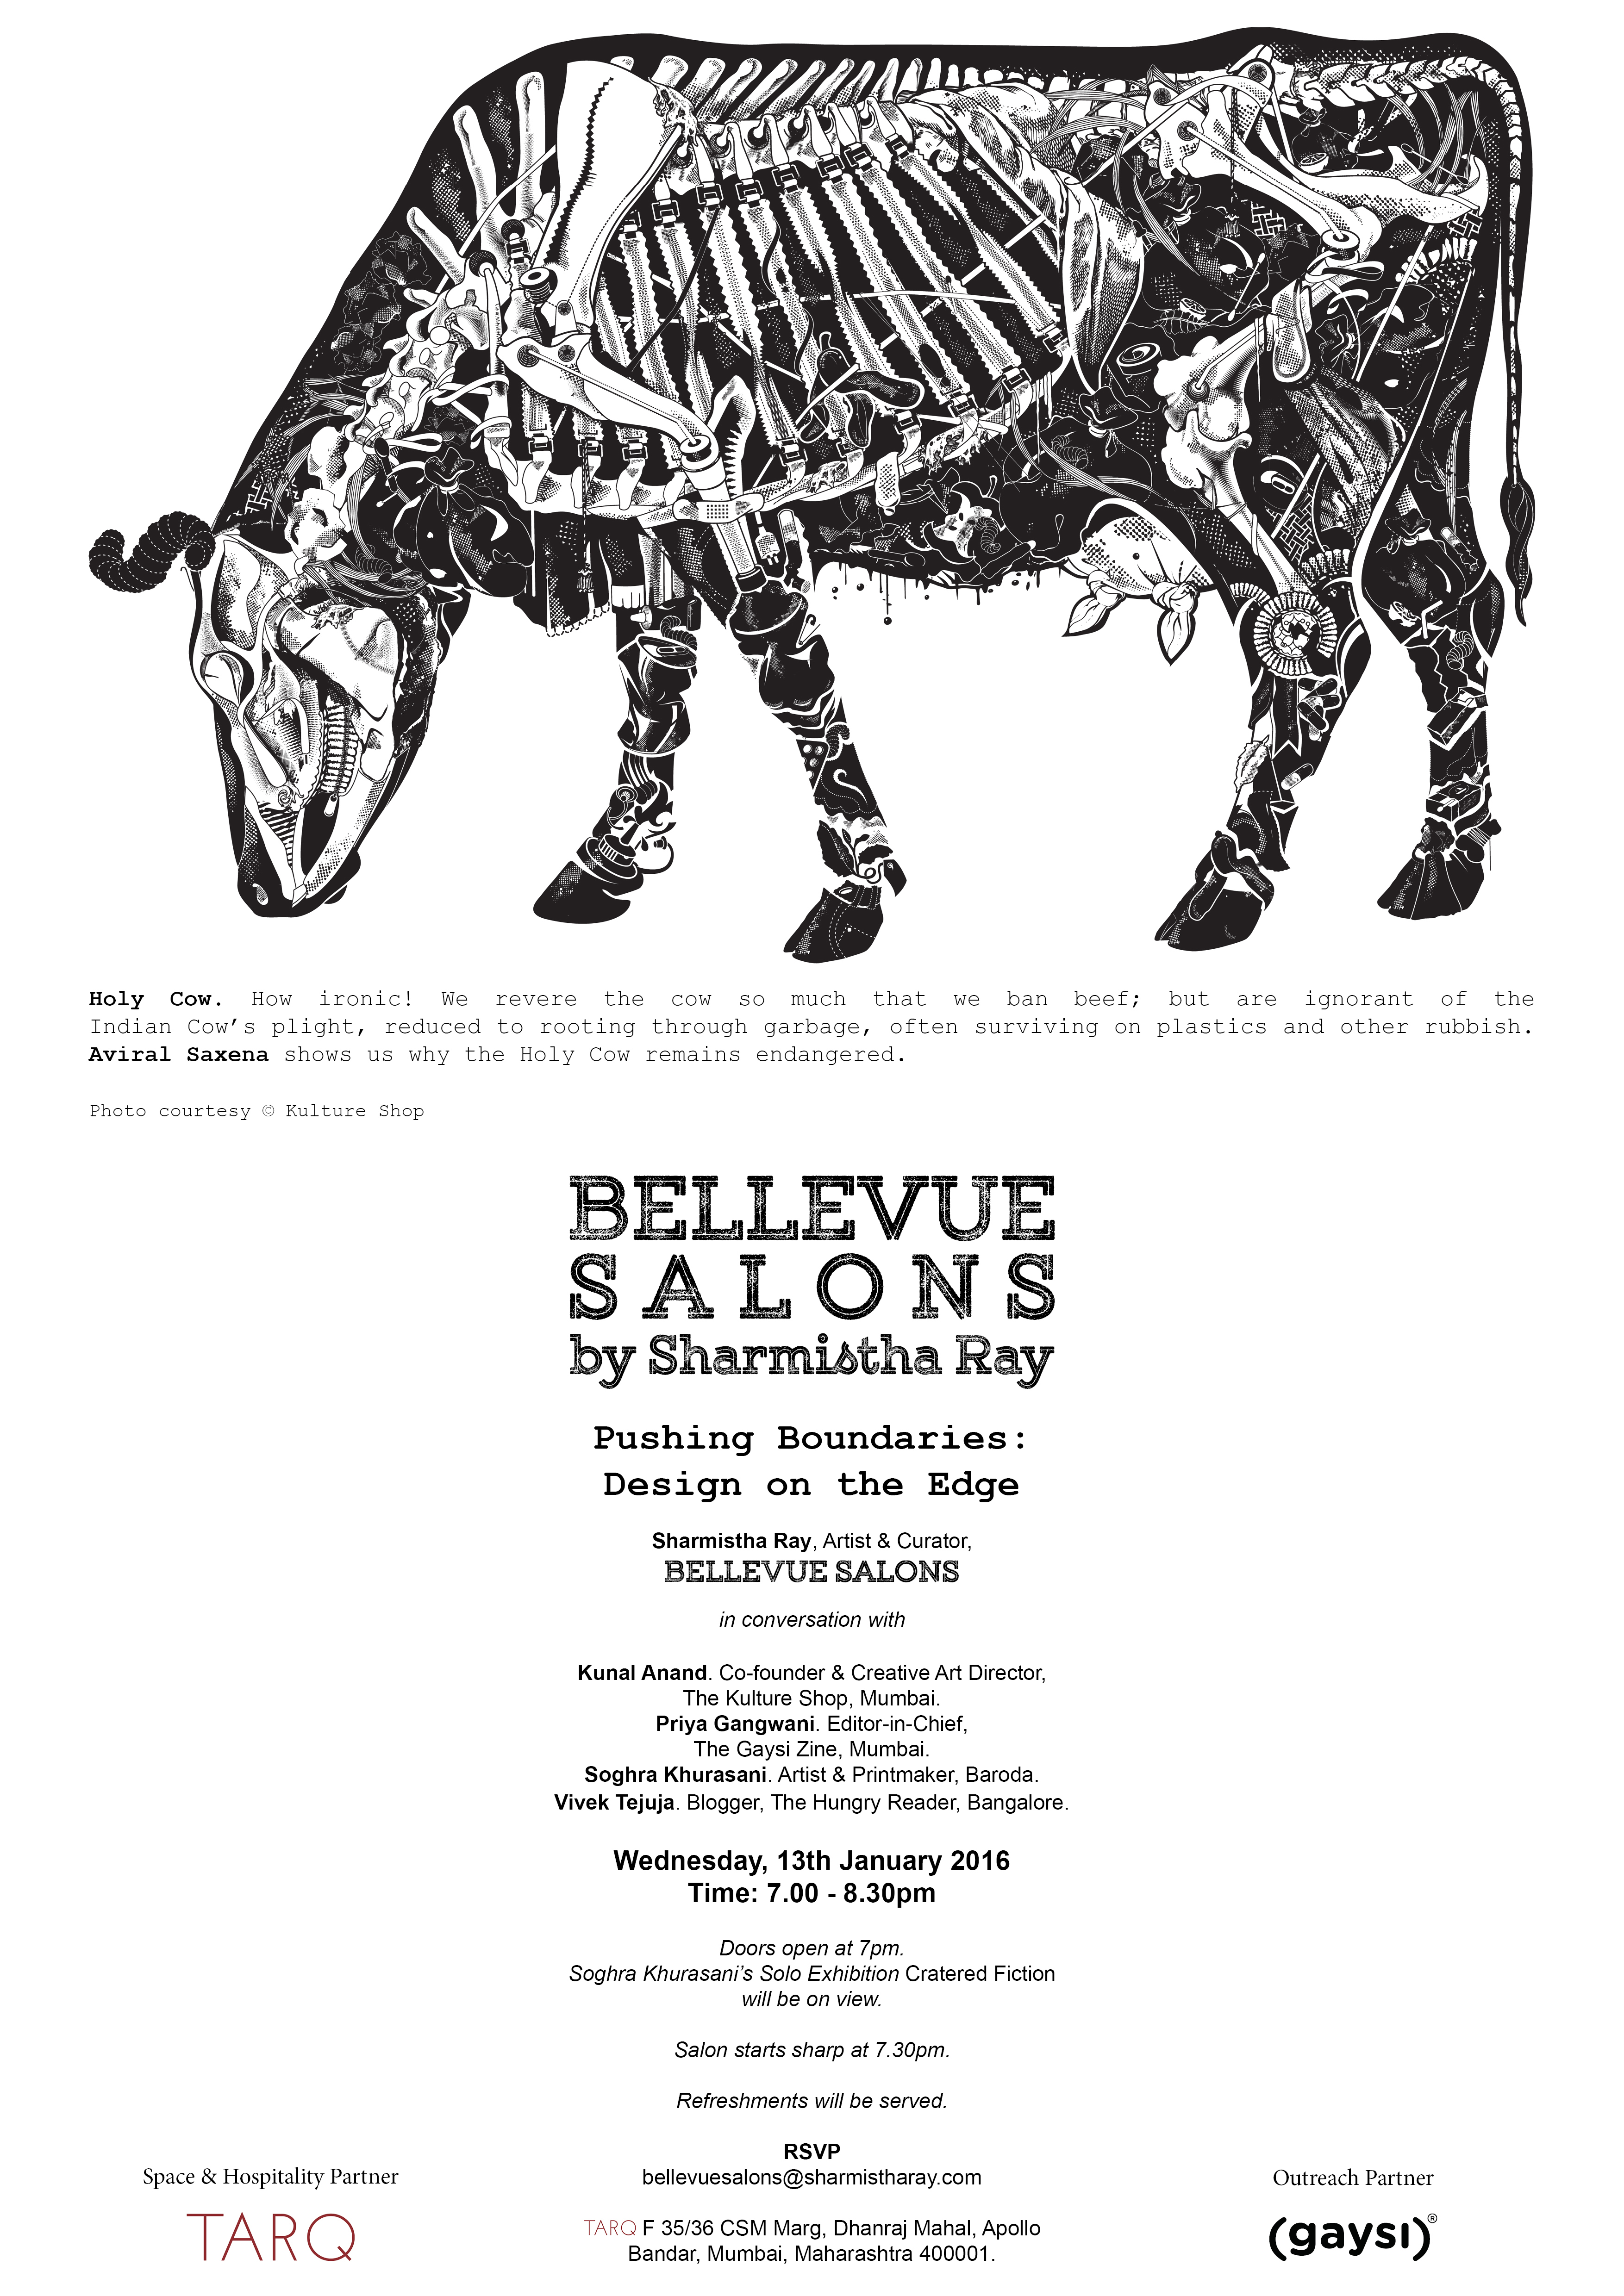 BELLEVUE SALONS PRESENTS  “Pushing Boundaries: Design on the Edge”